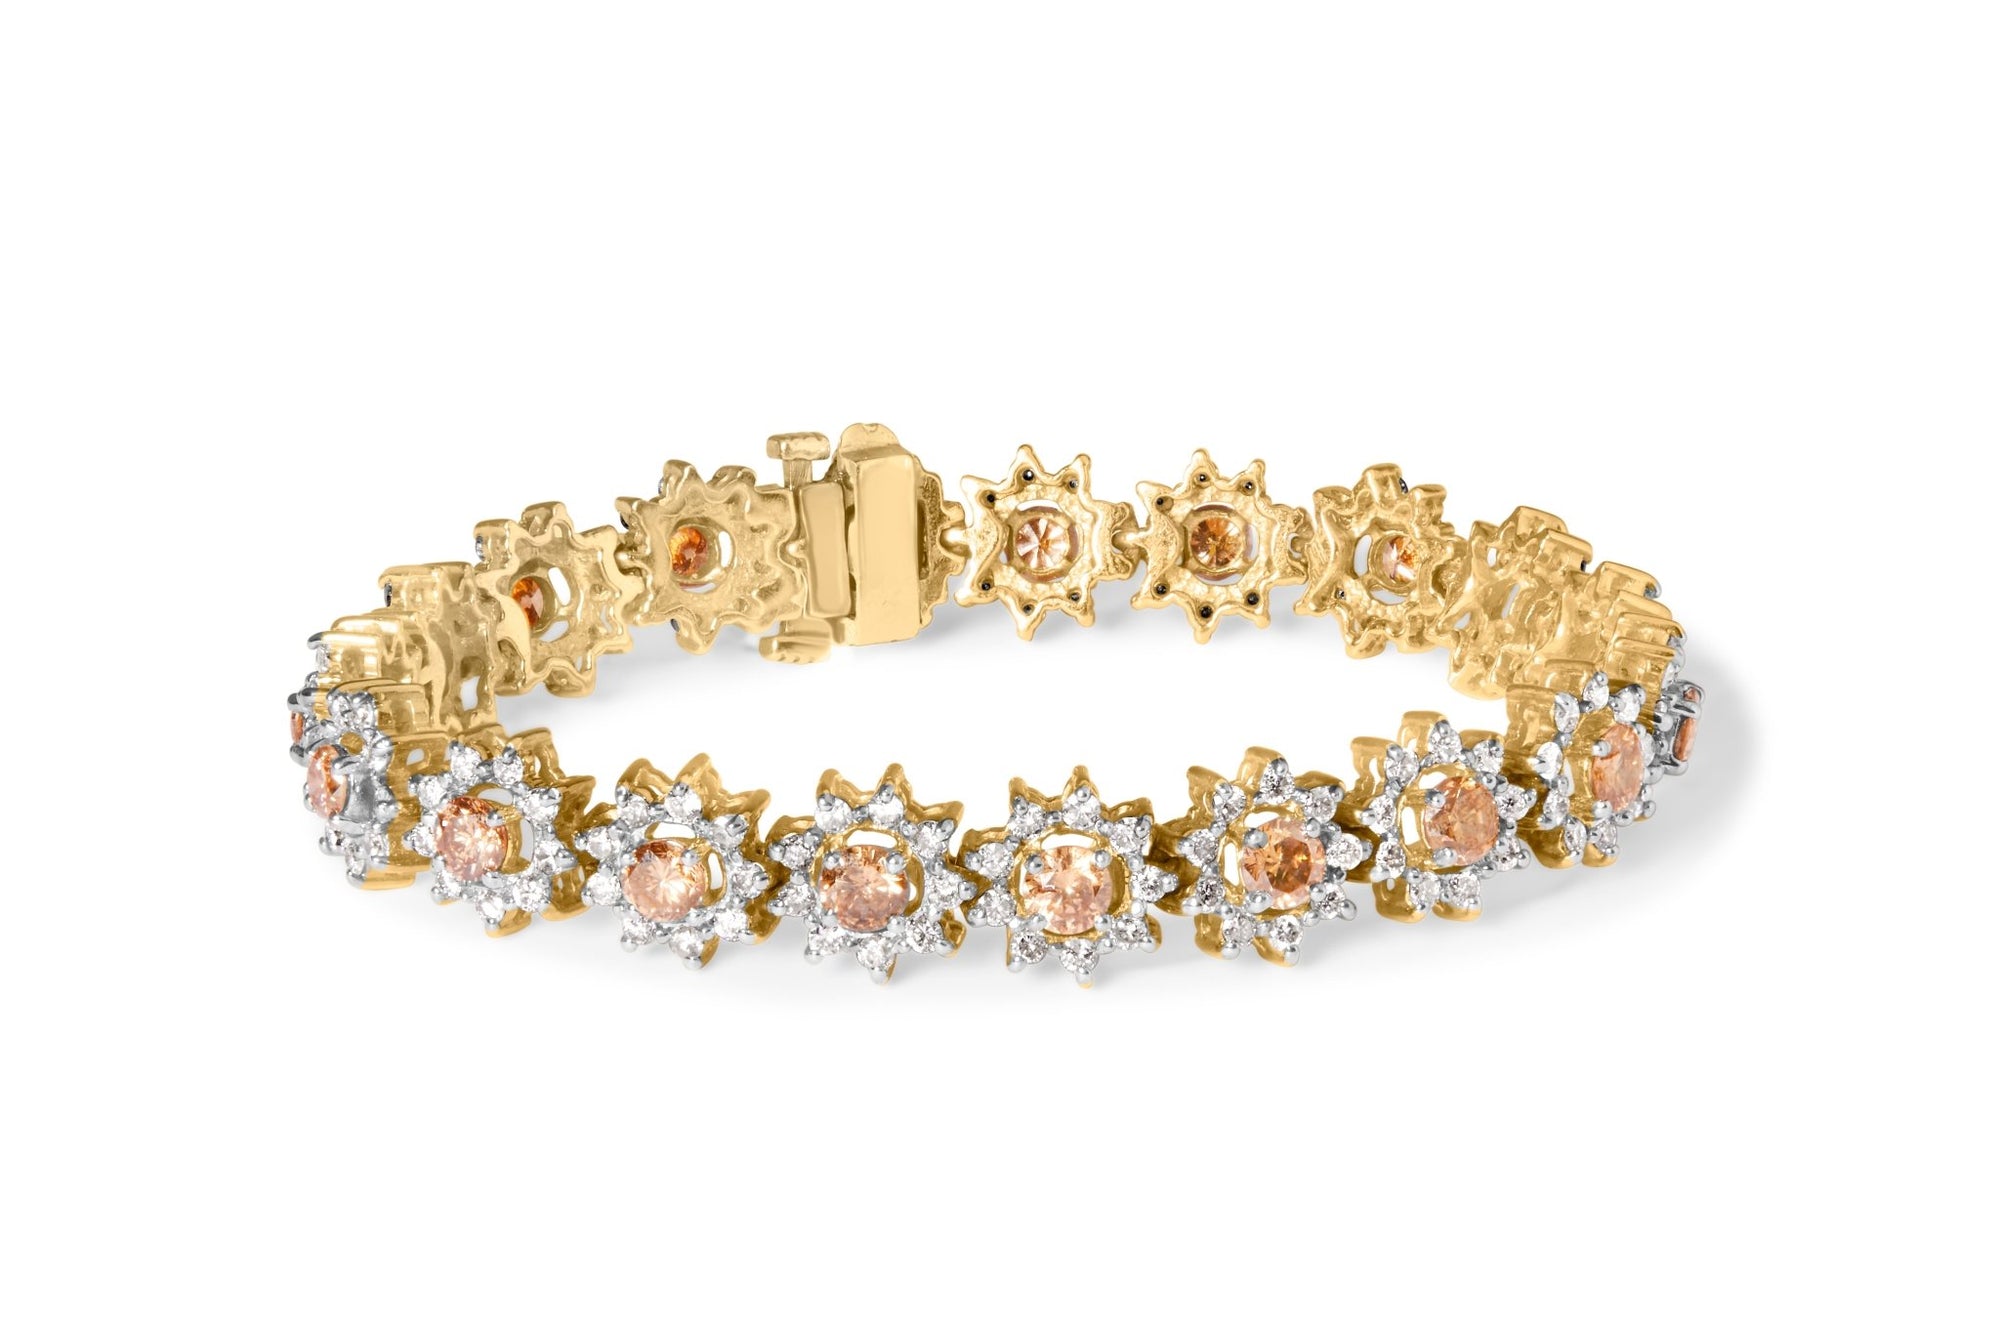 14K Yellow Gold 8.00 Cttw Champagne Diamond Floral Cluster Halo Link Bracelet (H-I Color, I1-I2 Clarity) - LinkagejewelrydesignLinkagejewelrydesign